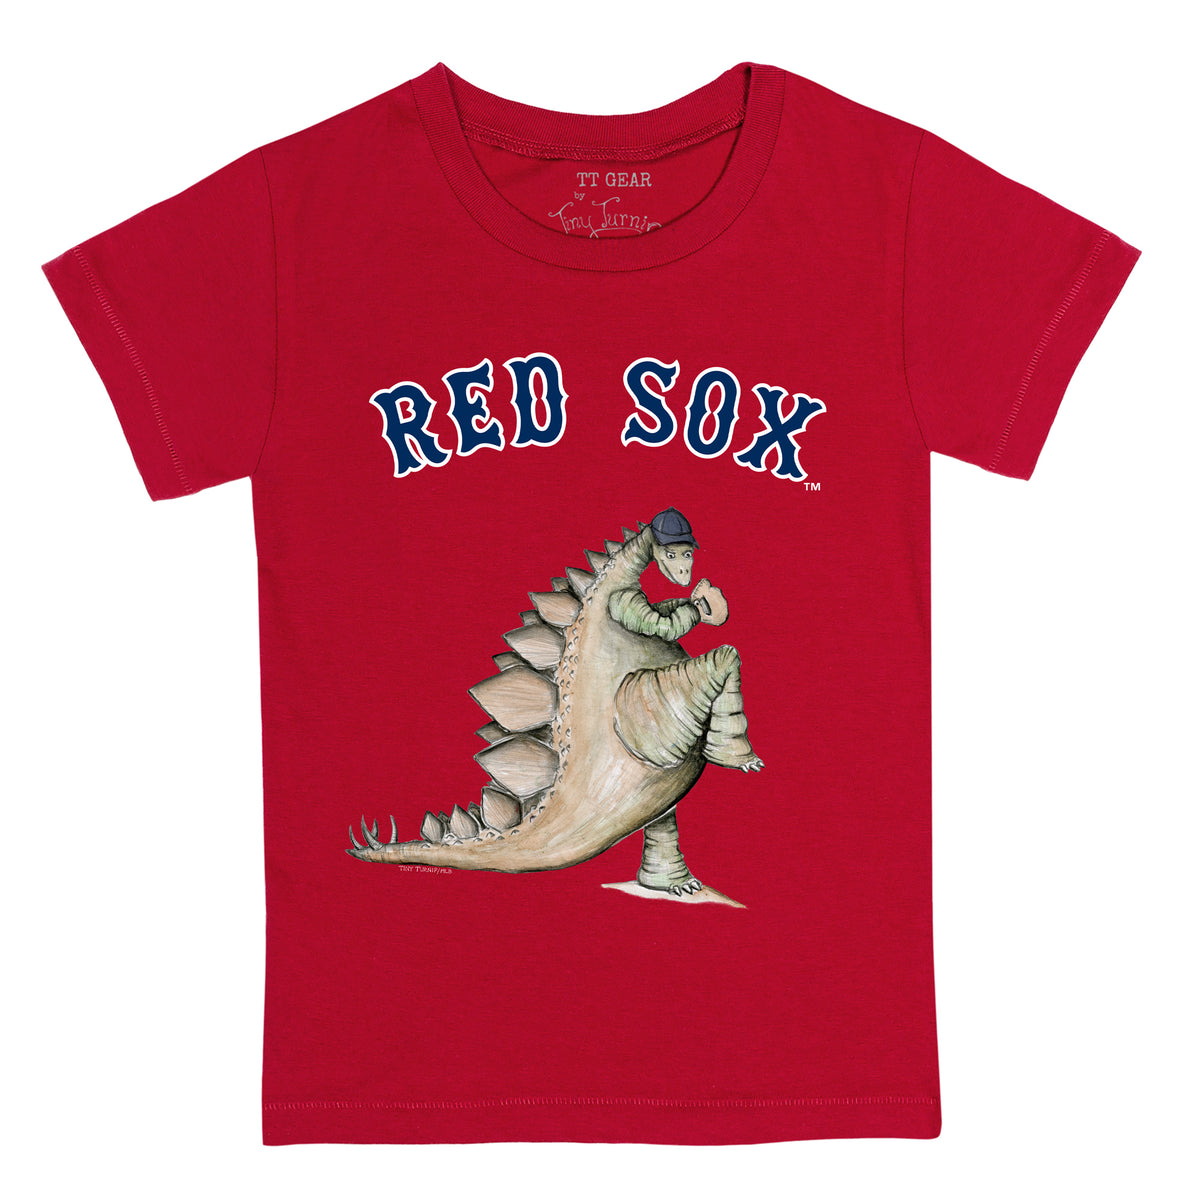 Tiny Turnip Boston Red Sox Stega Tee Shirt Women's Small / White